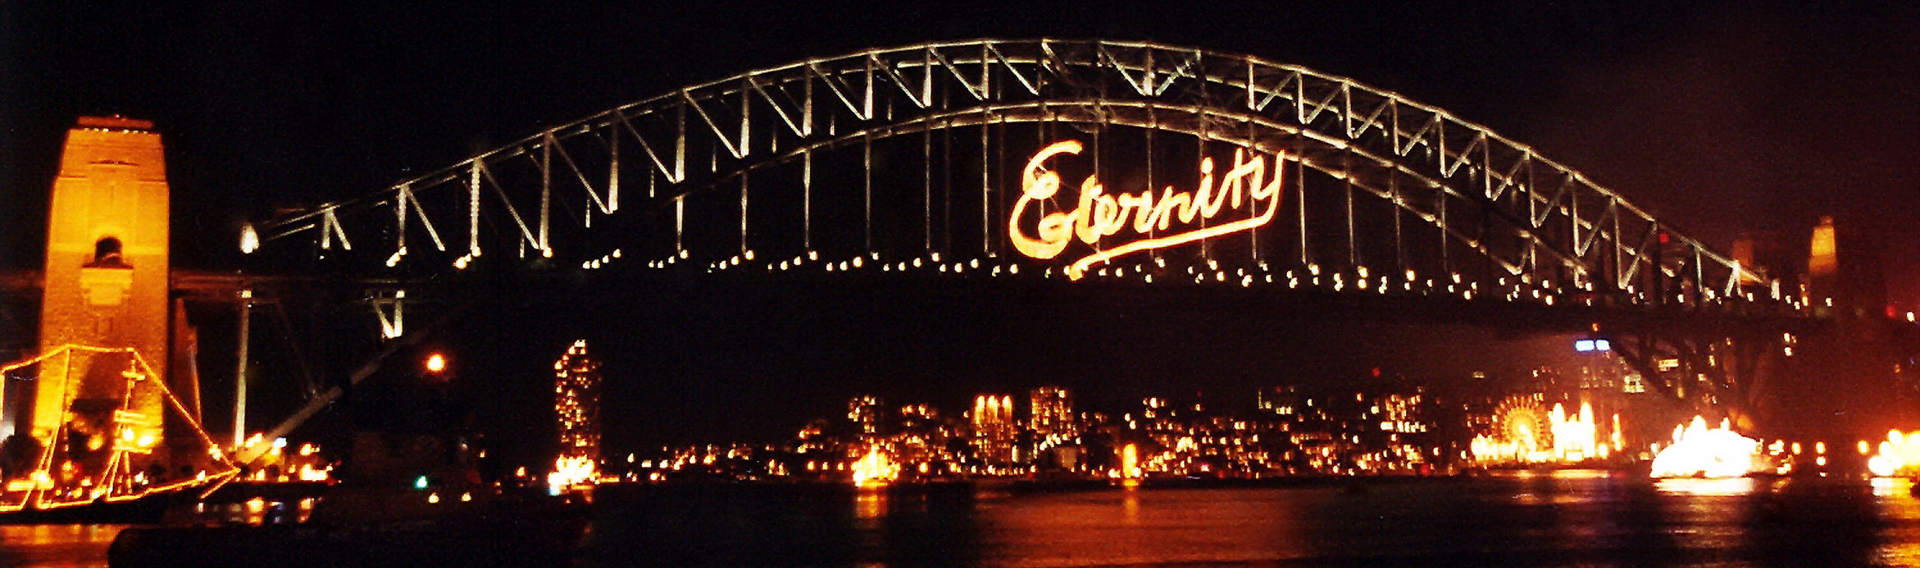 Eternity Matters Sydney Harbor Bridge